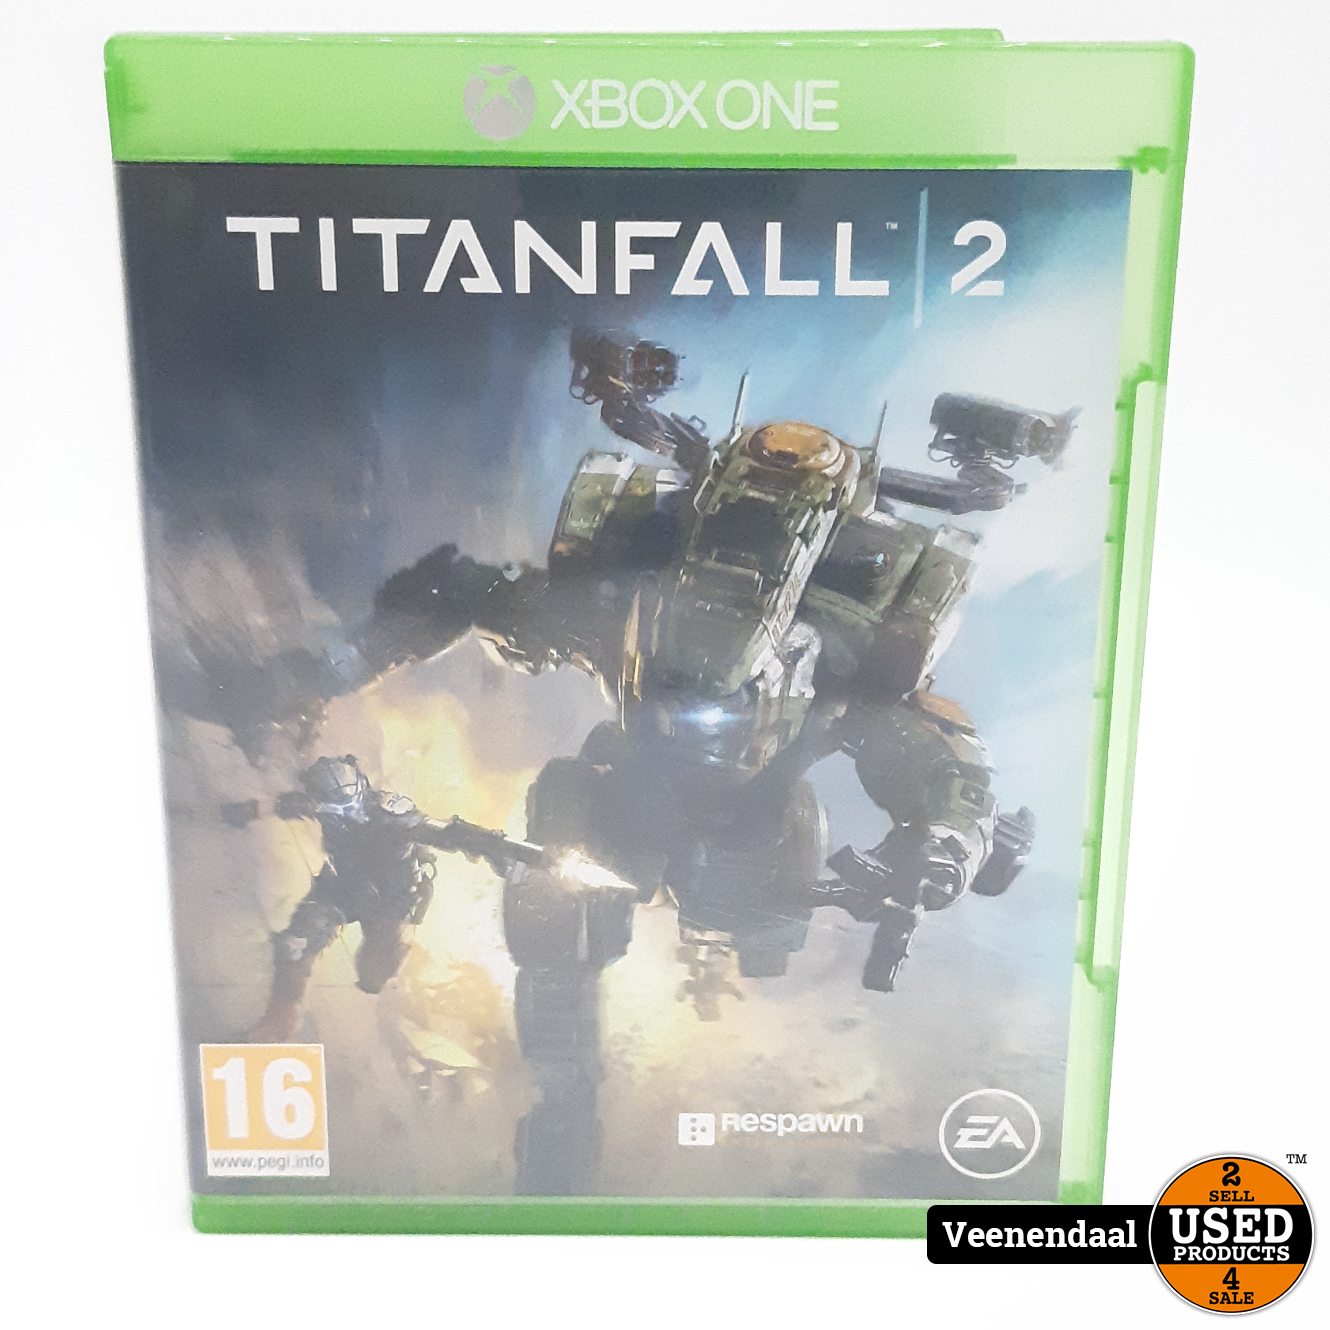 de elite deed het Anemoon vis Microsoft Titanfall 2 - Xbox One Game - Used Products Veenendaal